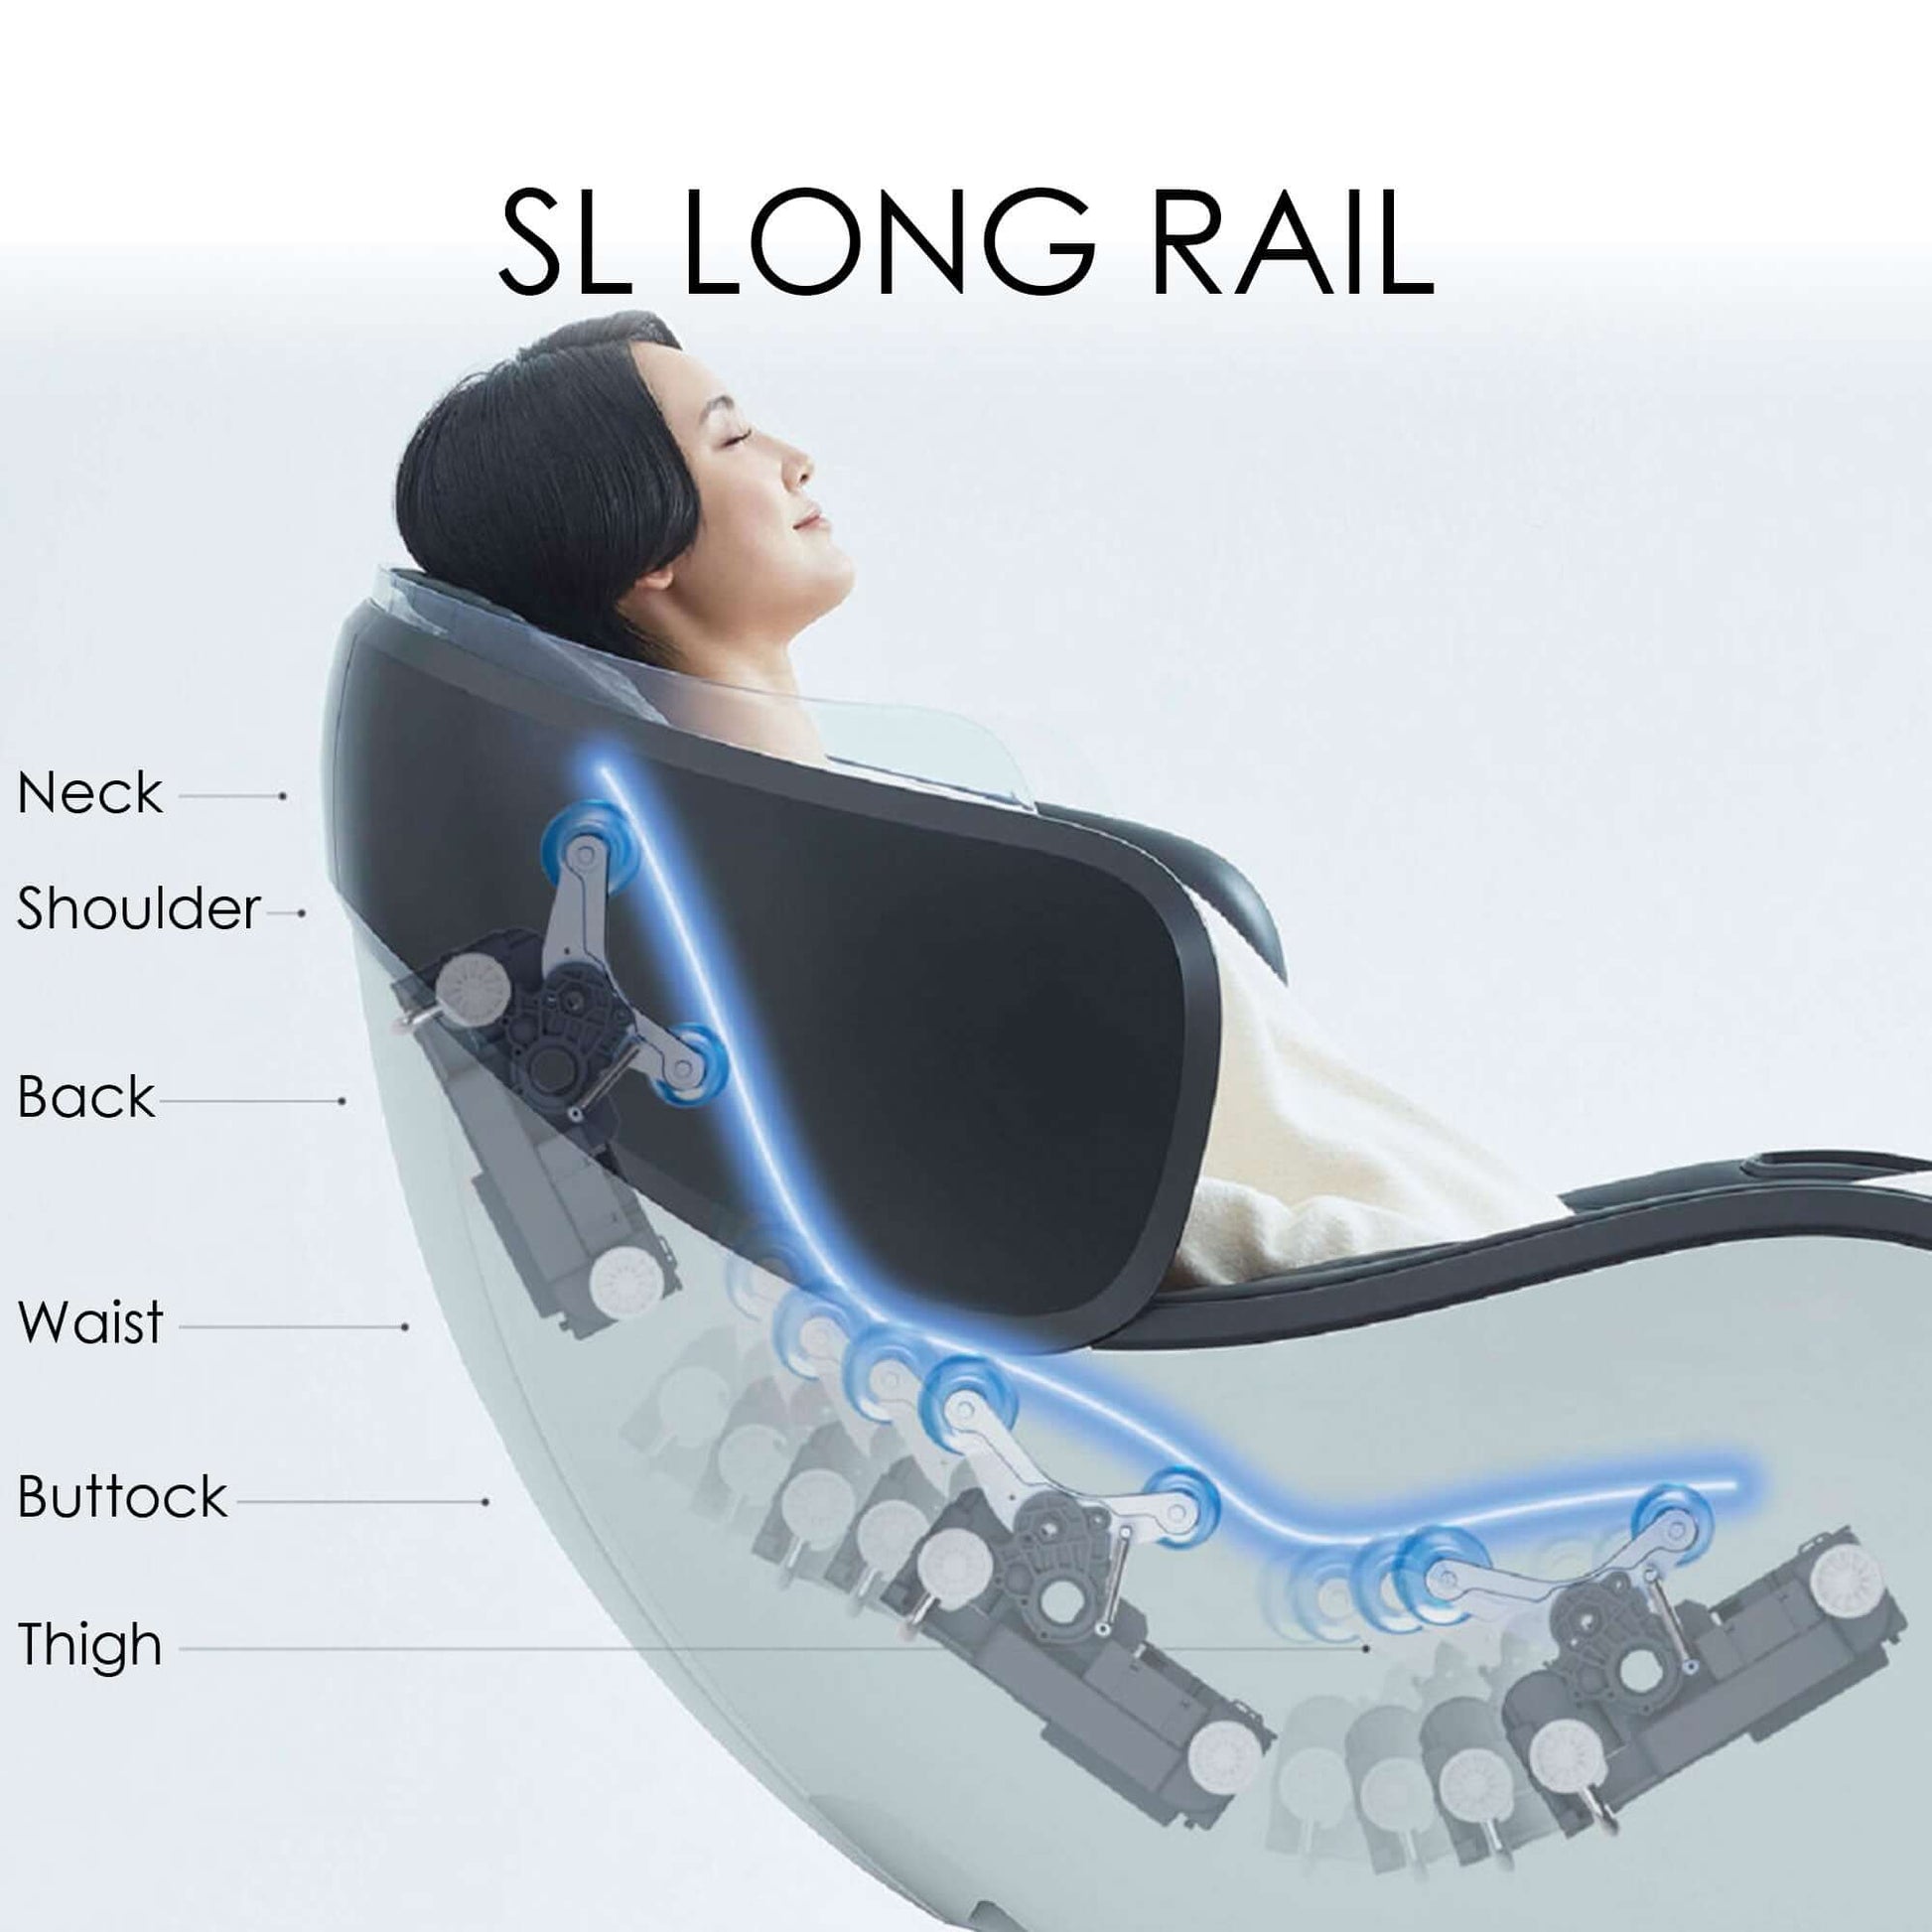 Synca Wellness CirC 3 Zero Gravity SL Track Heated Massage Chair - Electric Massaging Chairs